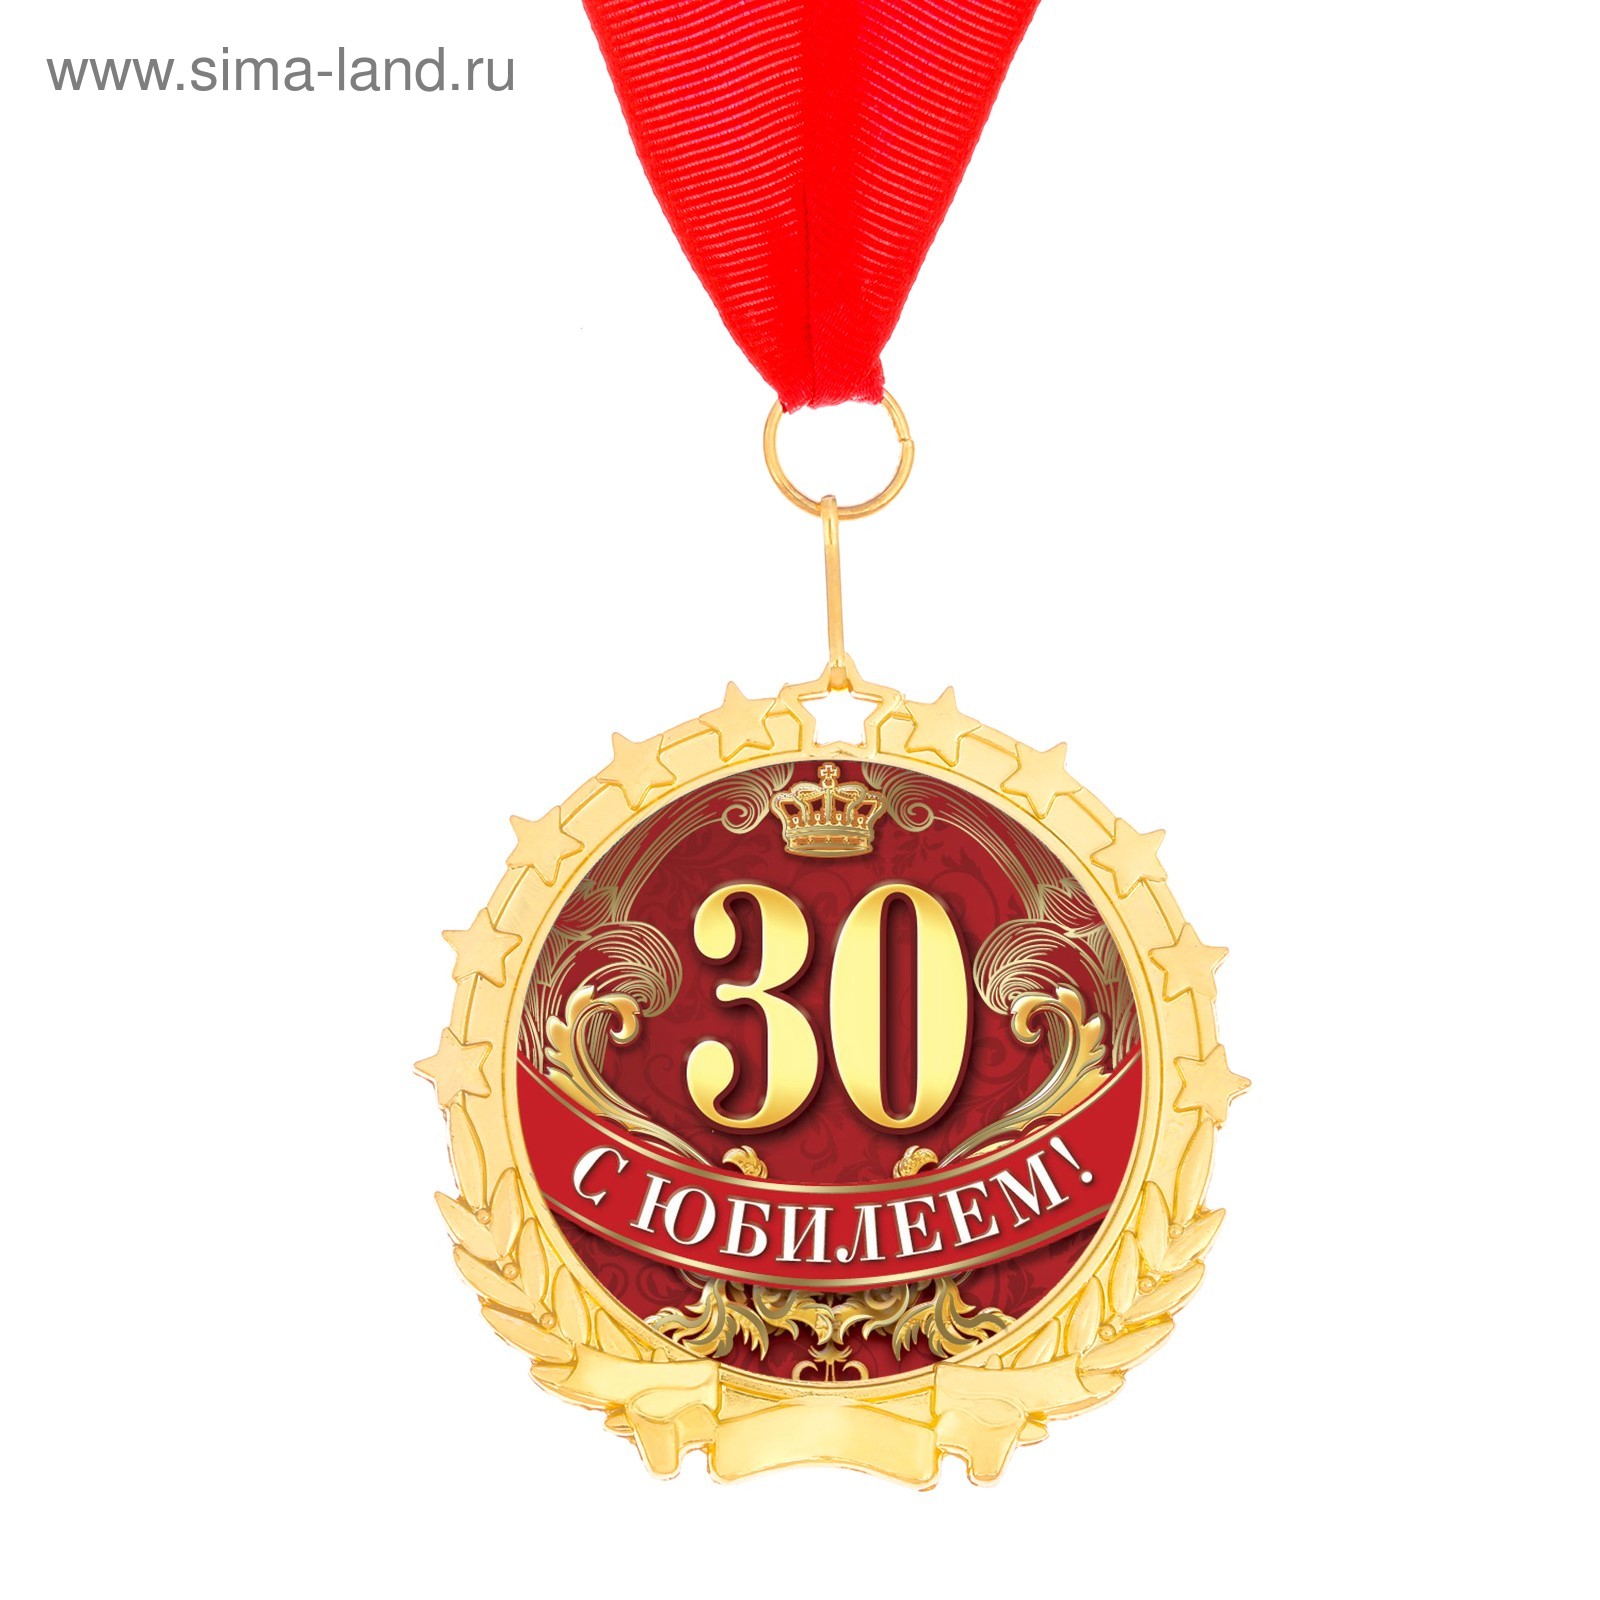 Медаль для юбиляра 30 лет